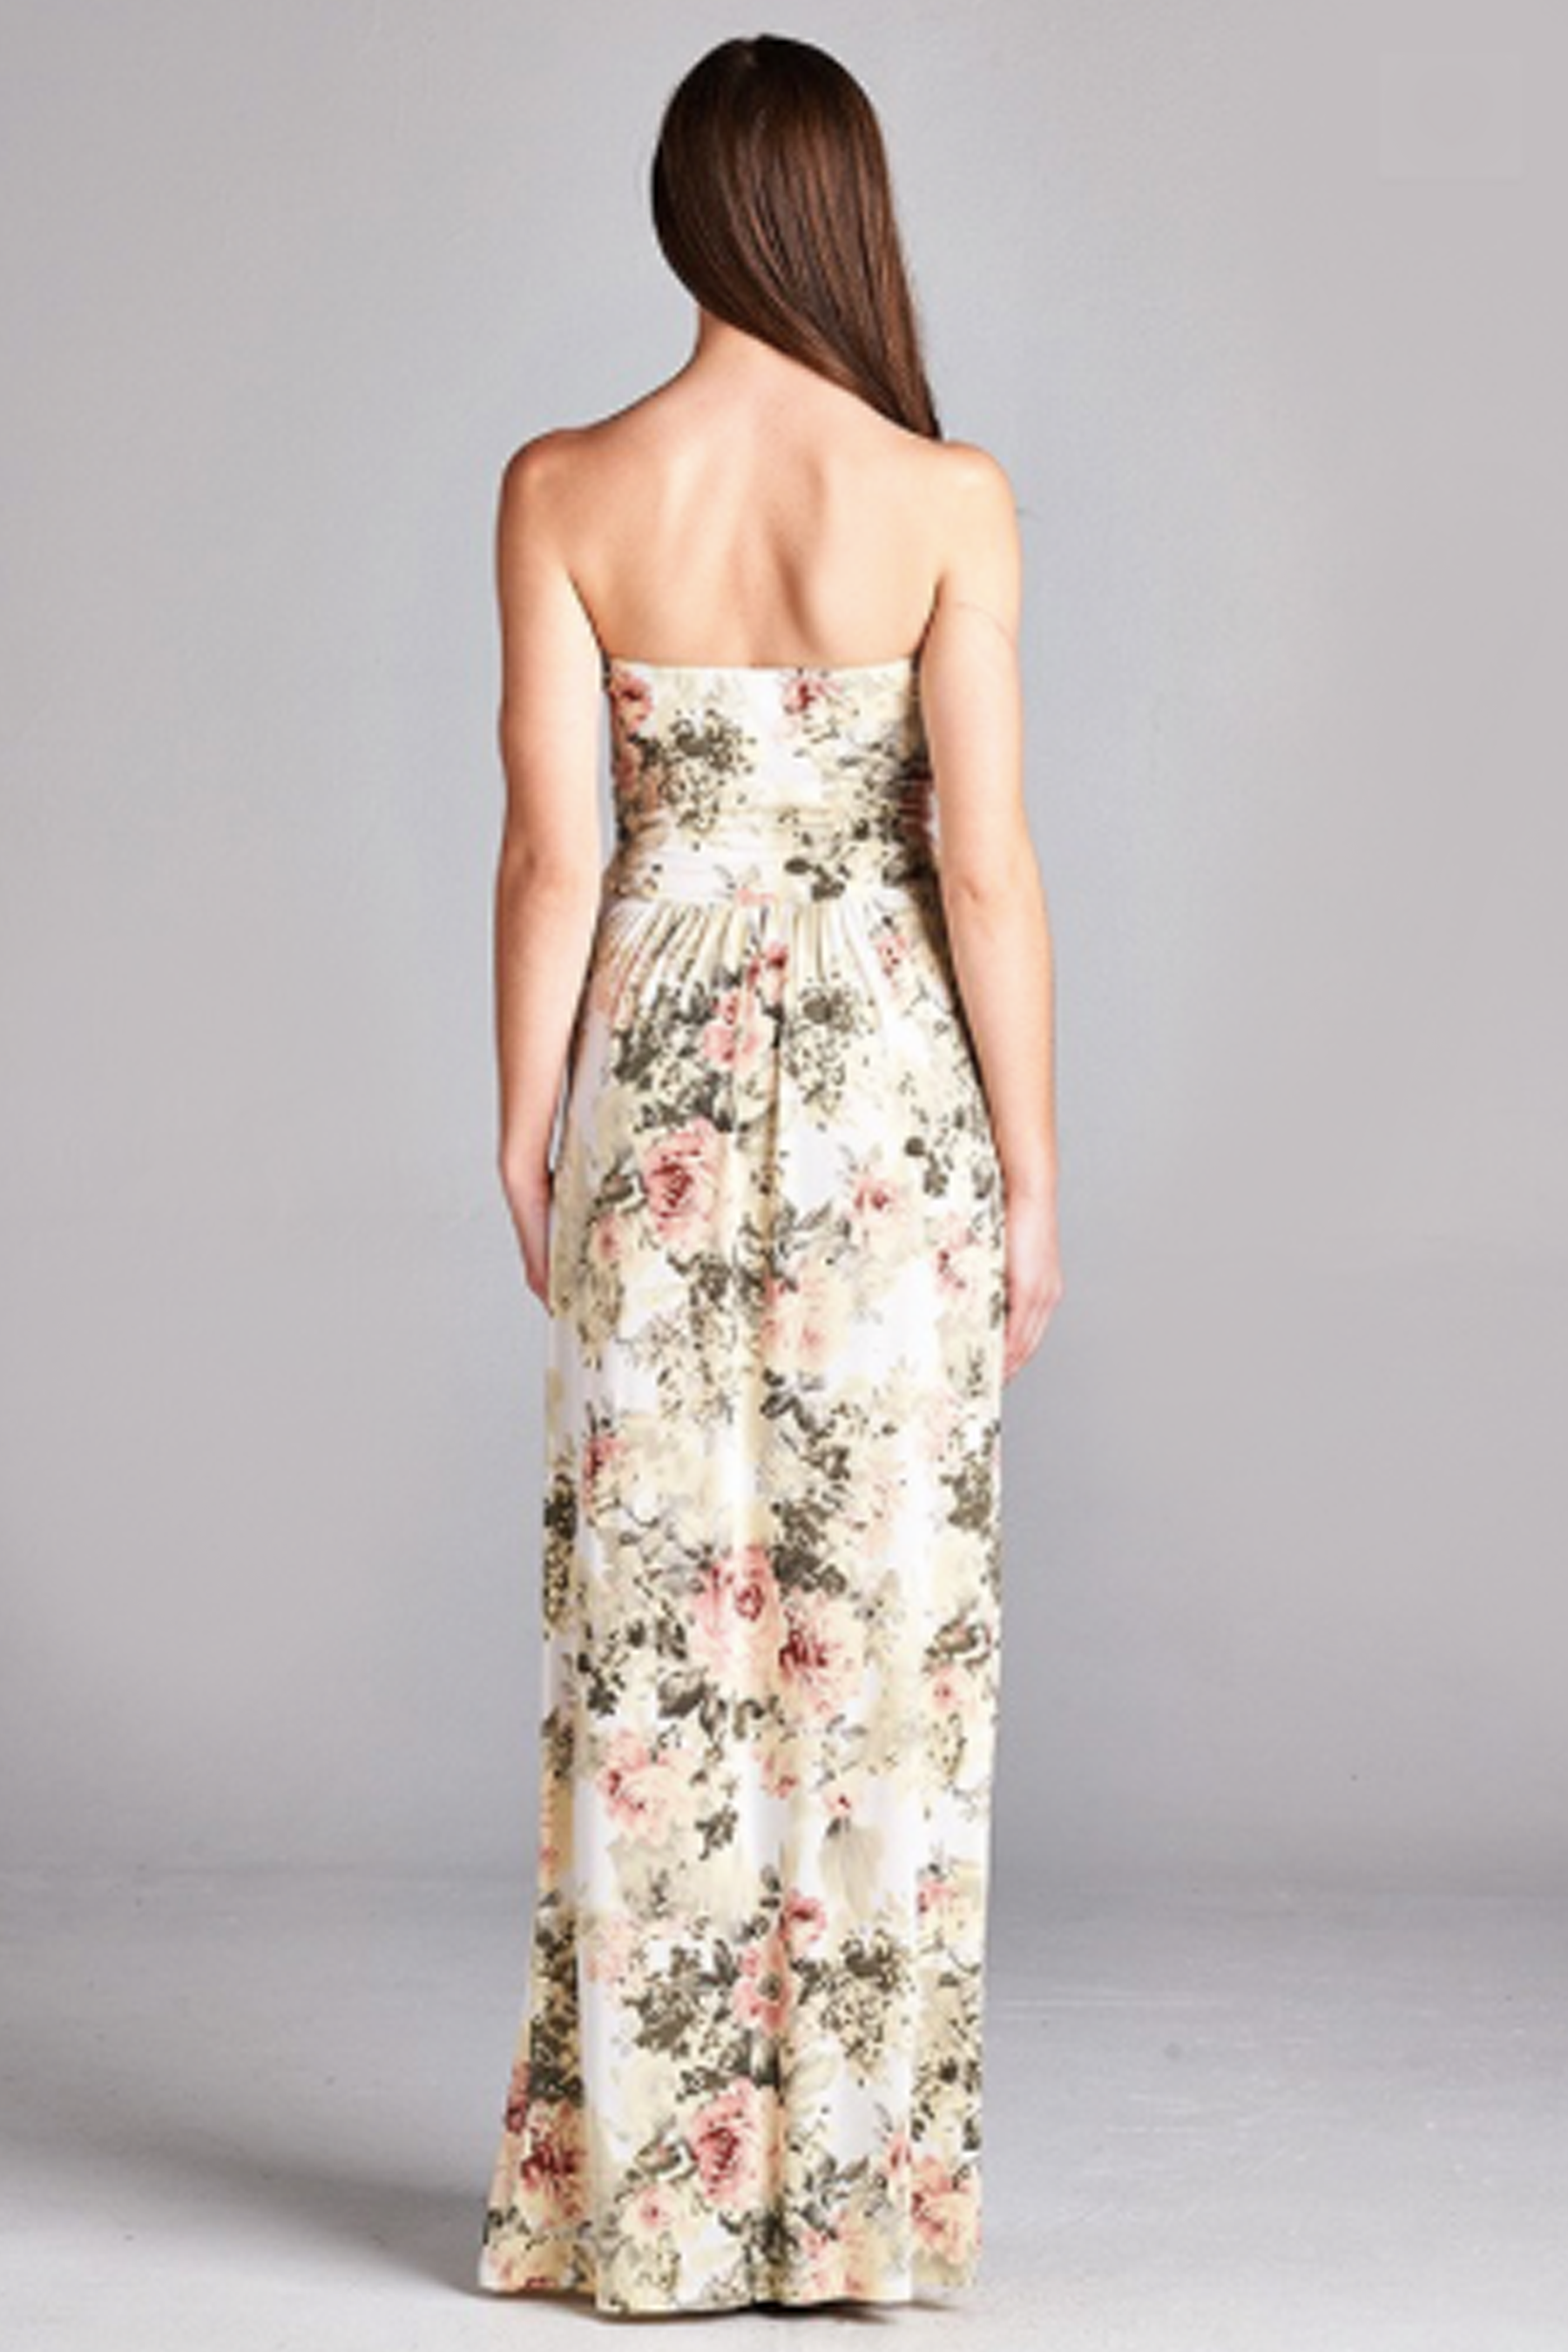 'Antique Roses' Dress - Ivory